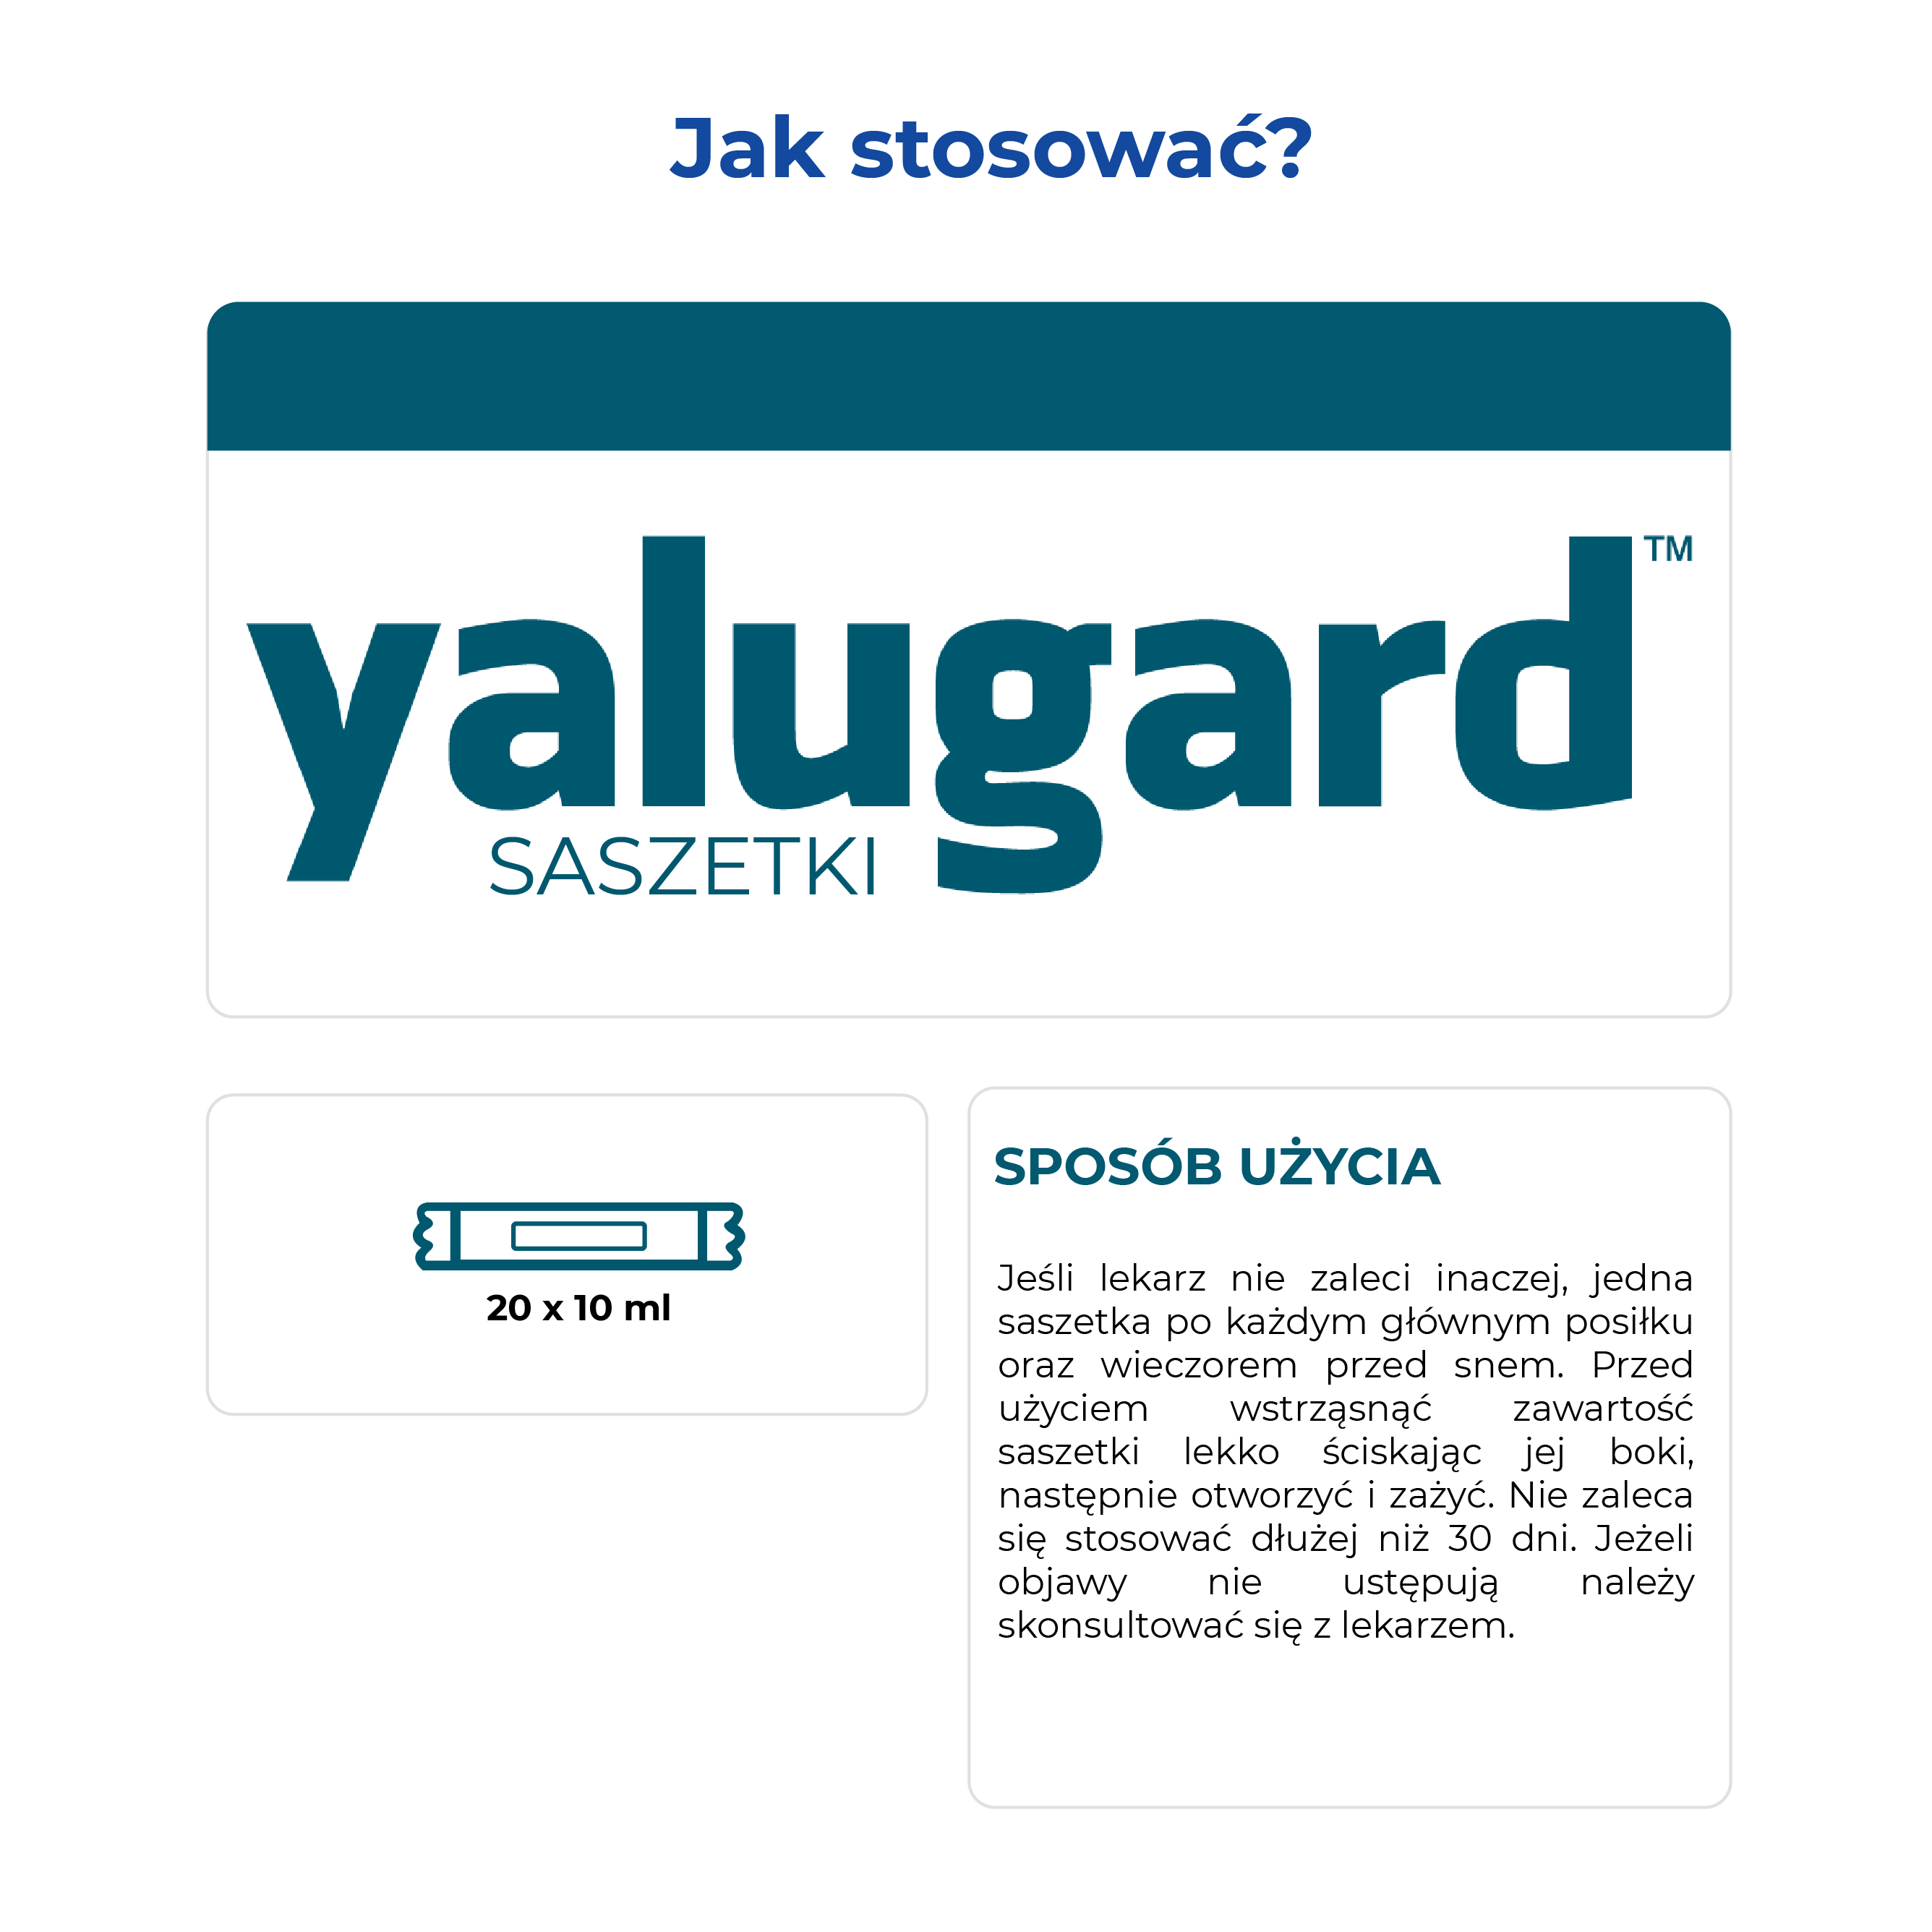 yalugard™ saszetki